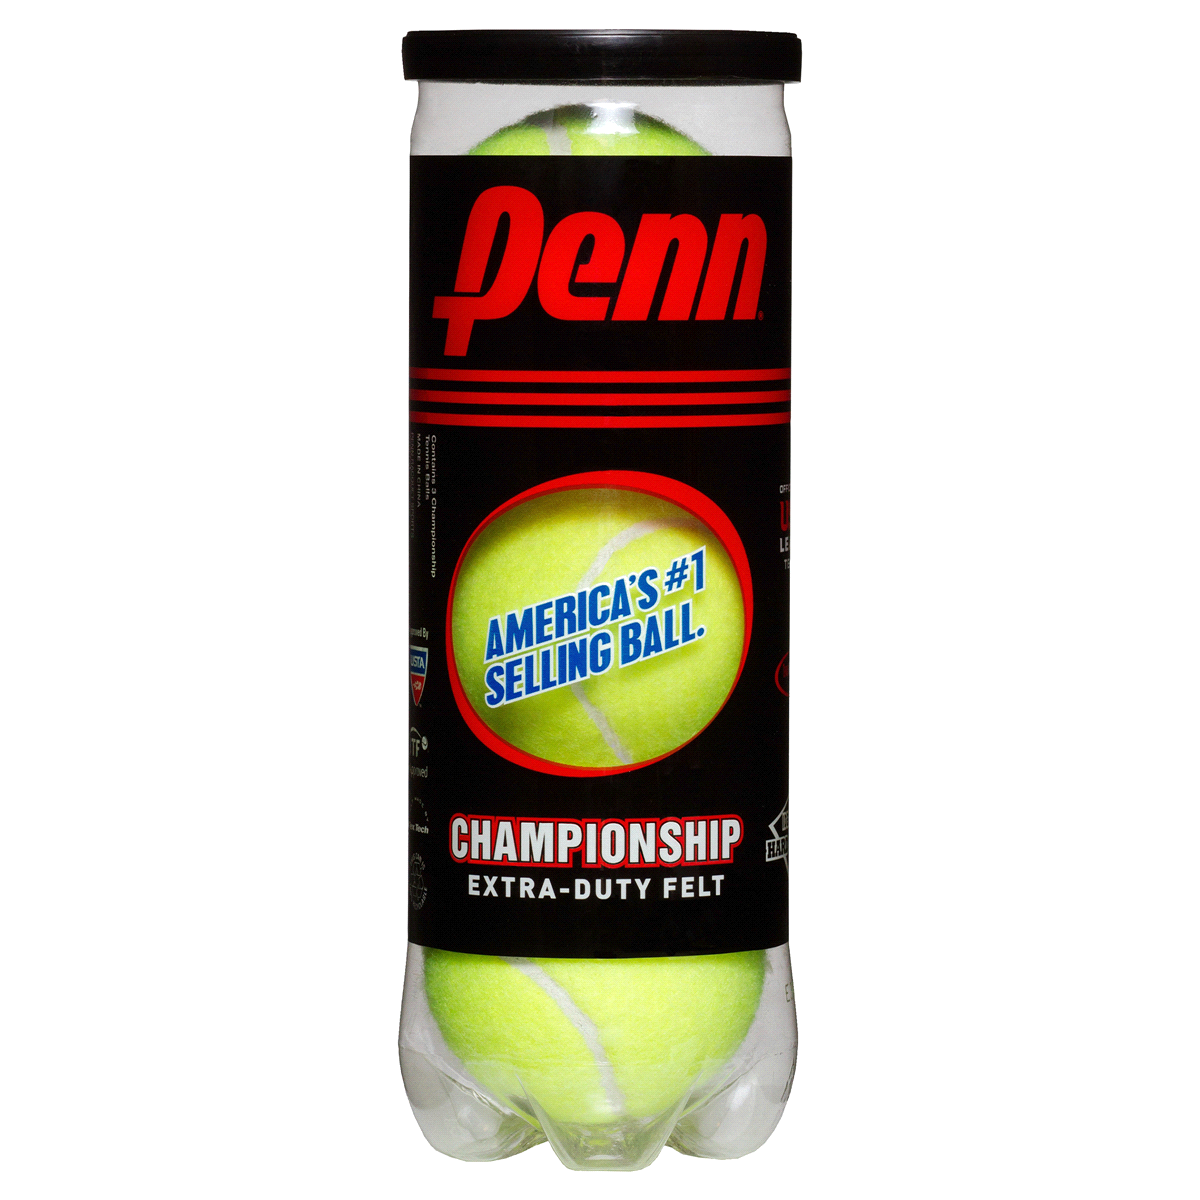 Penn Championship Tennis Balls - 3 Pack